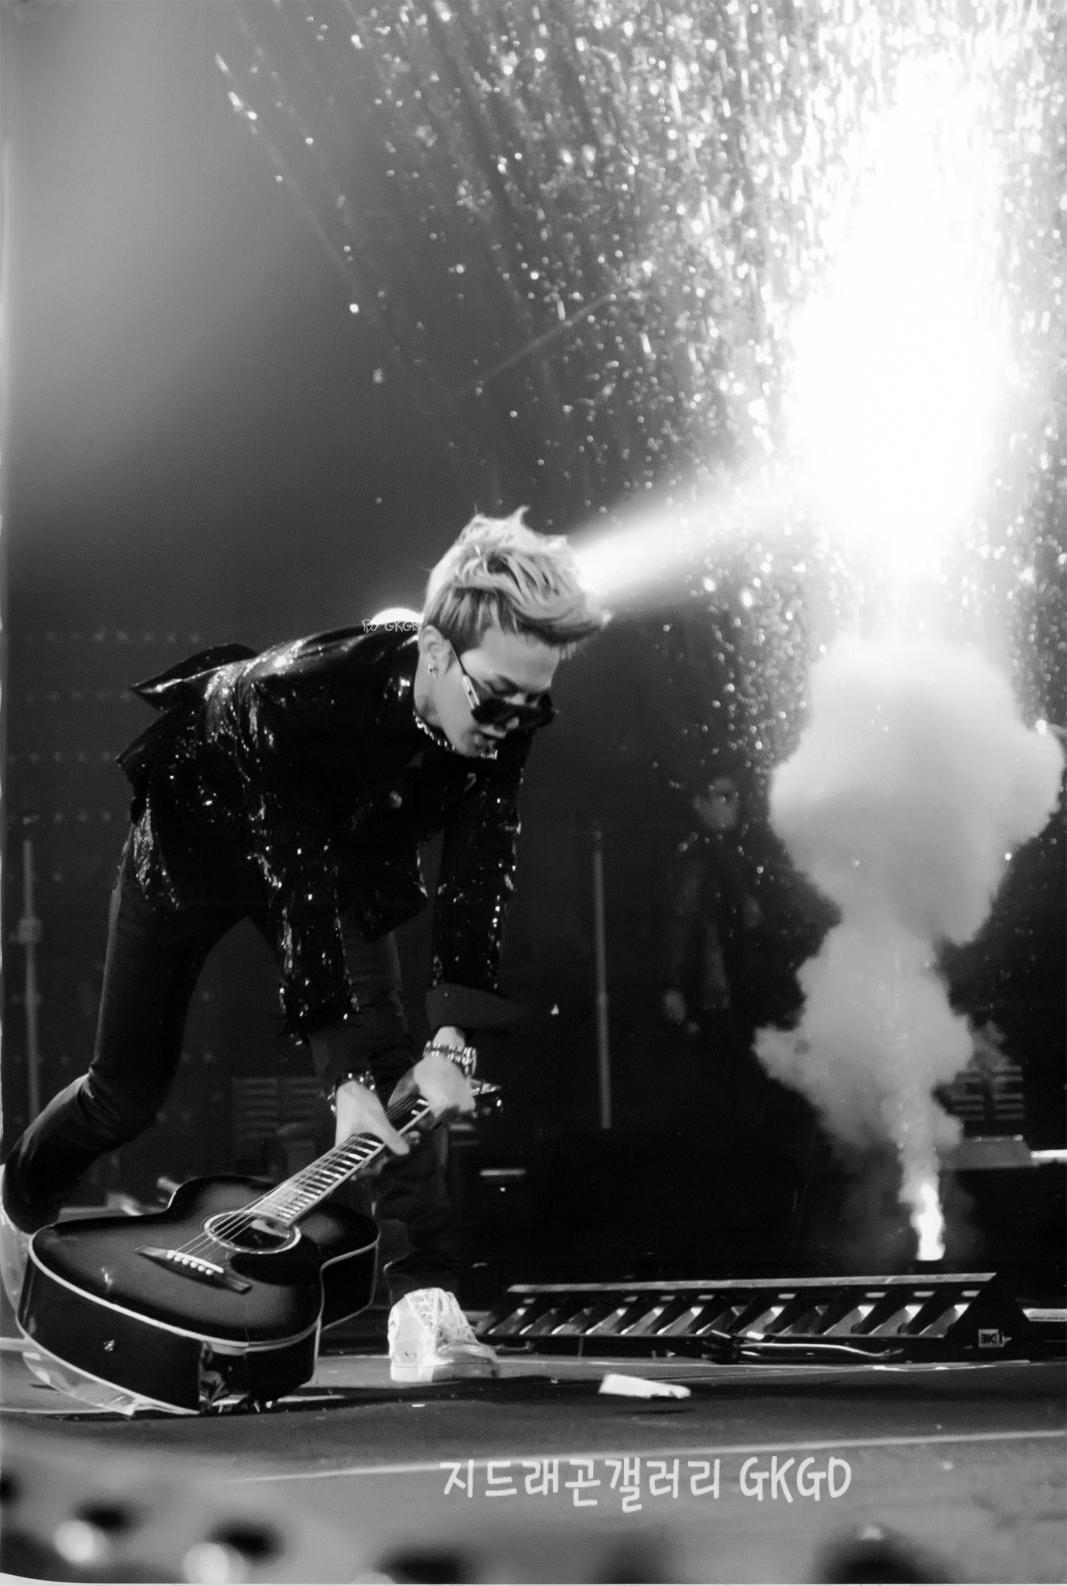 [Pics] Scans de G-Dragon & Daesung del DVD “Love and Hope Tour 2011″ Gd+1